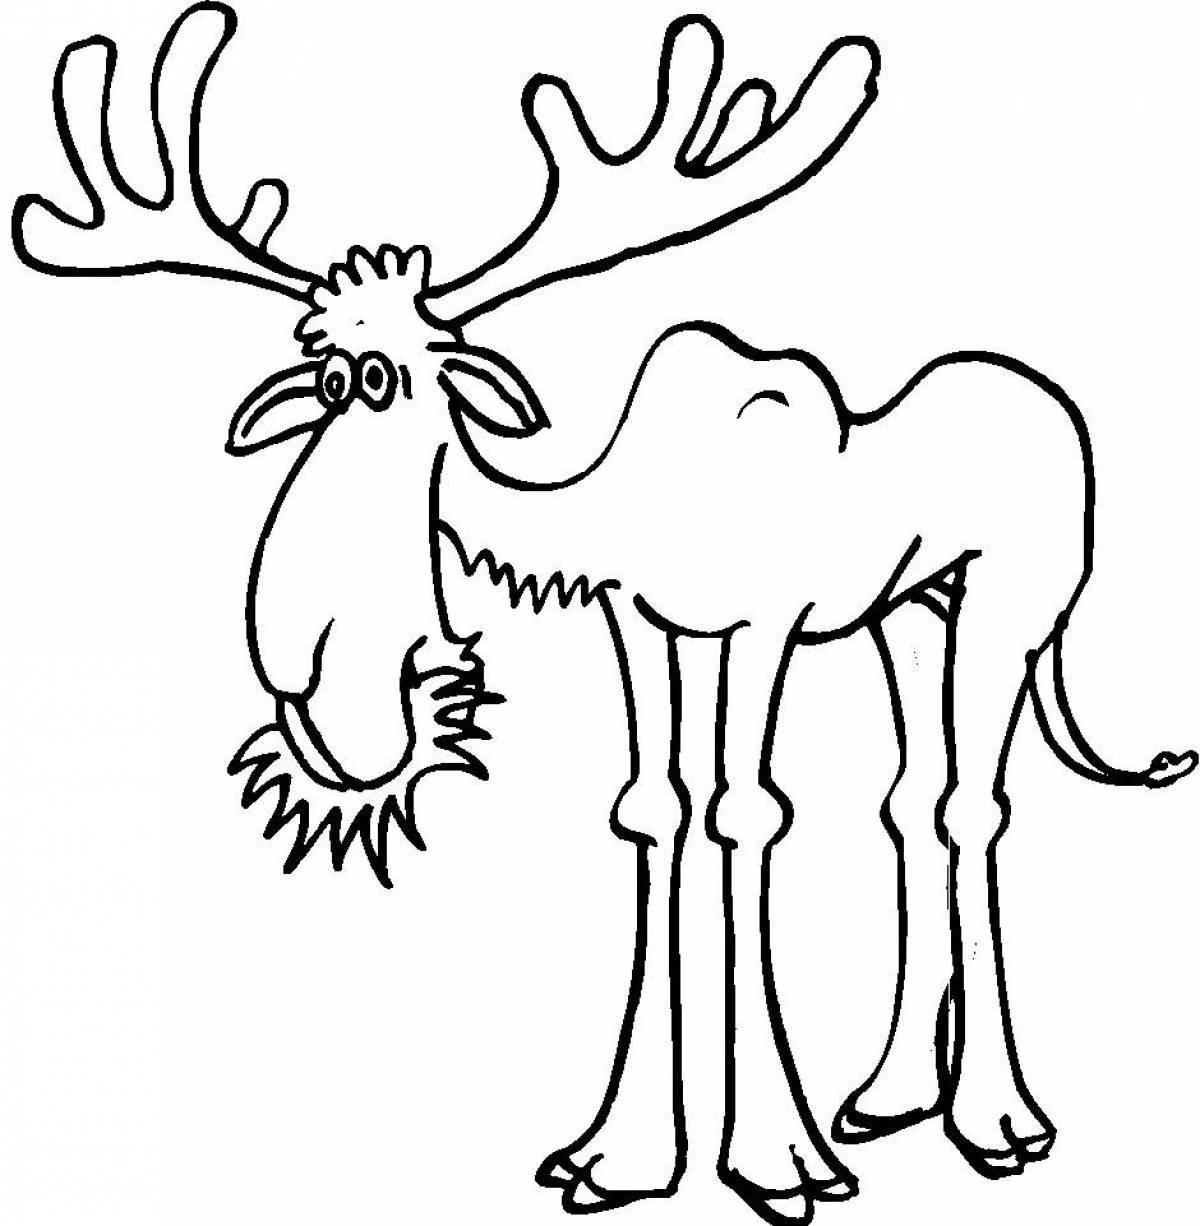 A fun moose coloring book for kids